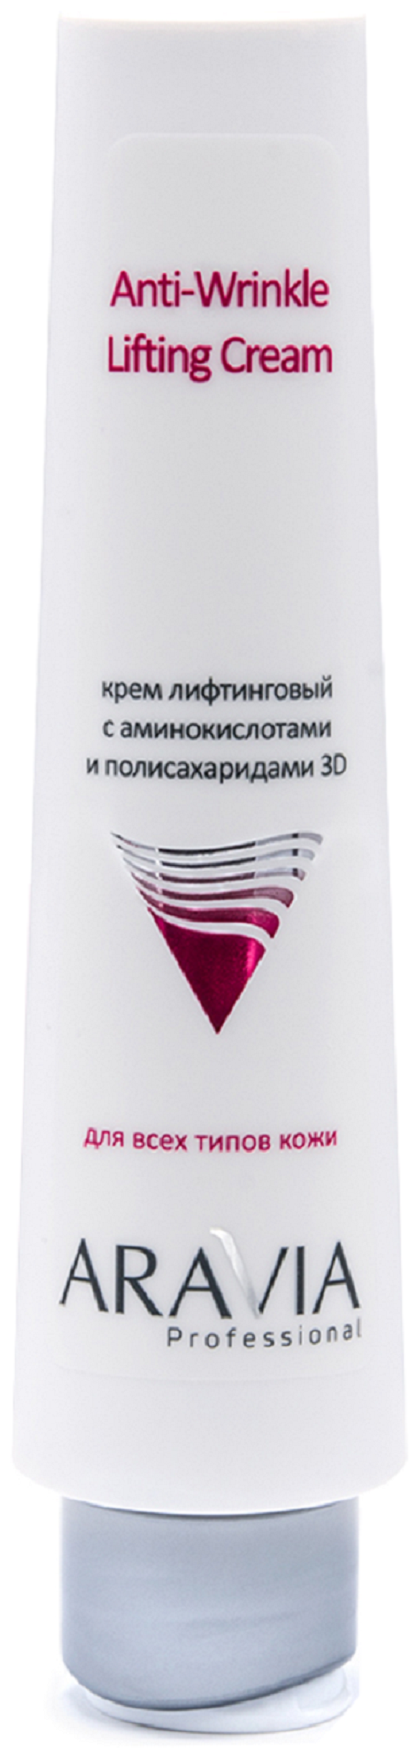 ARAVIA Professional Anti-Wrinkle Lifting Cream крем для лица лифтинговый с аминокислотами и полисахаридами, 100 мл